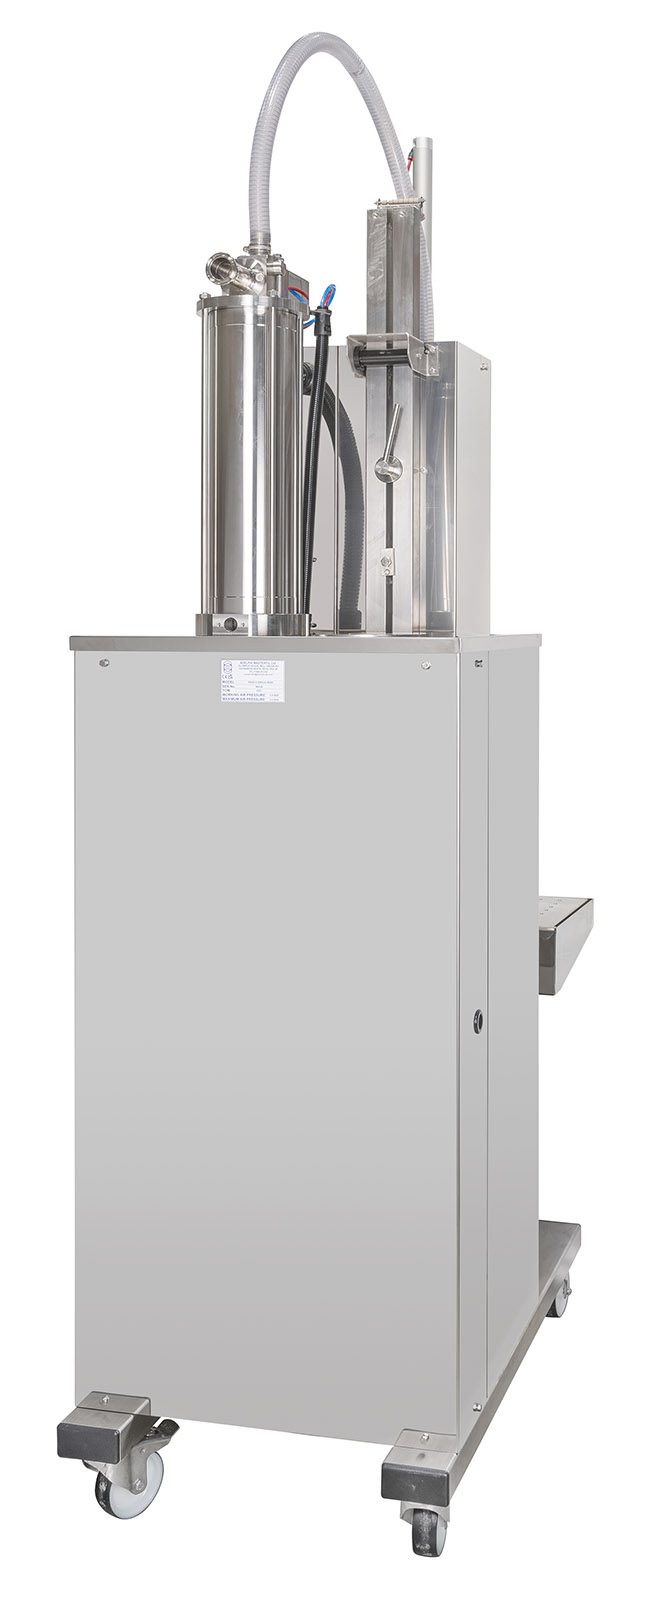 Adelphi Masterfil S5000-S Volumetric Semi-Automatic Filling Machine for Chemicals